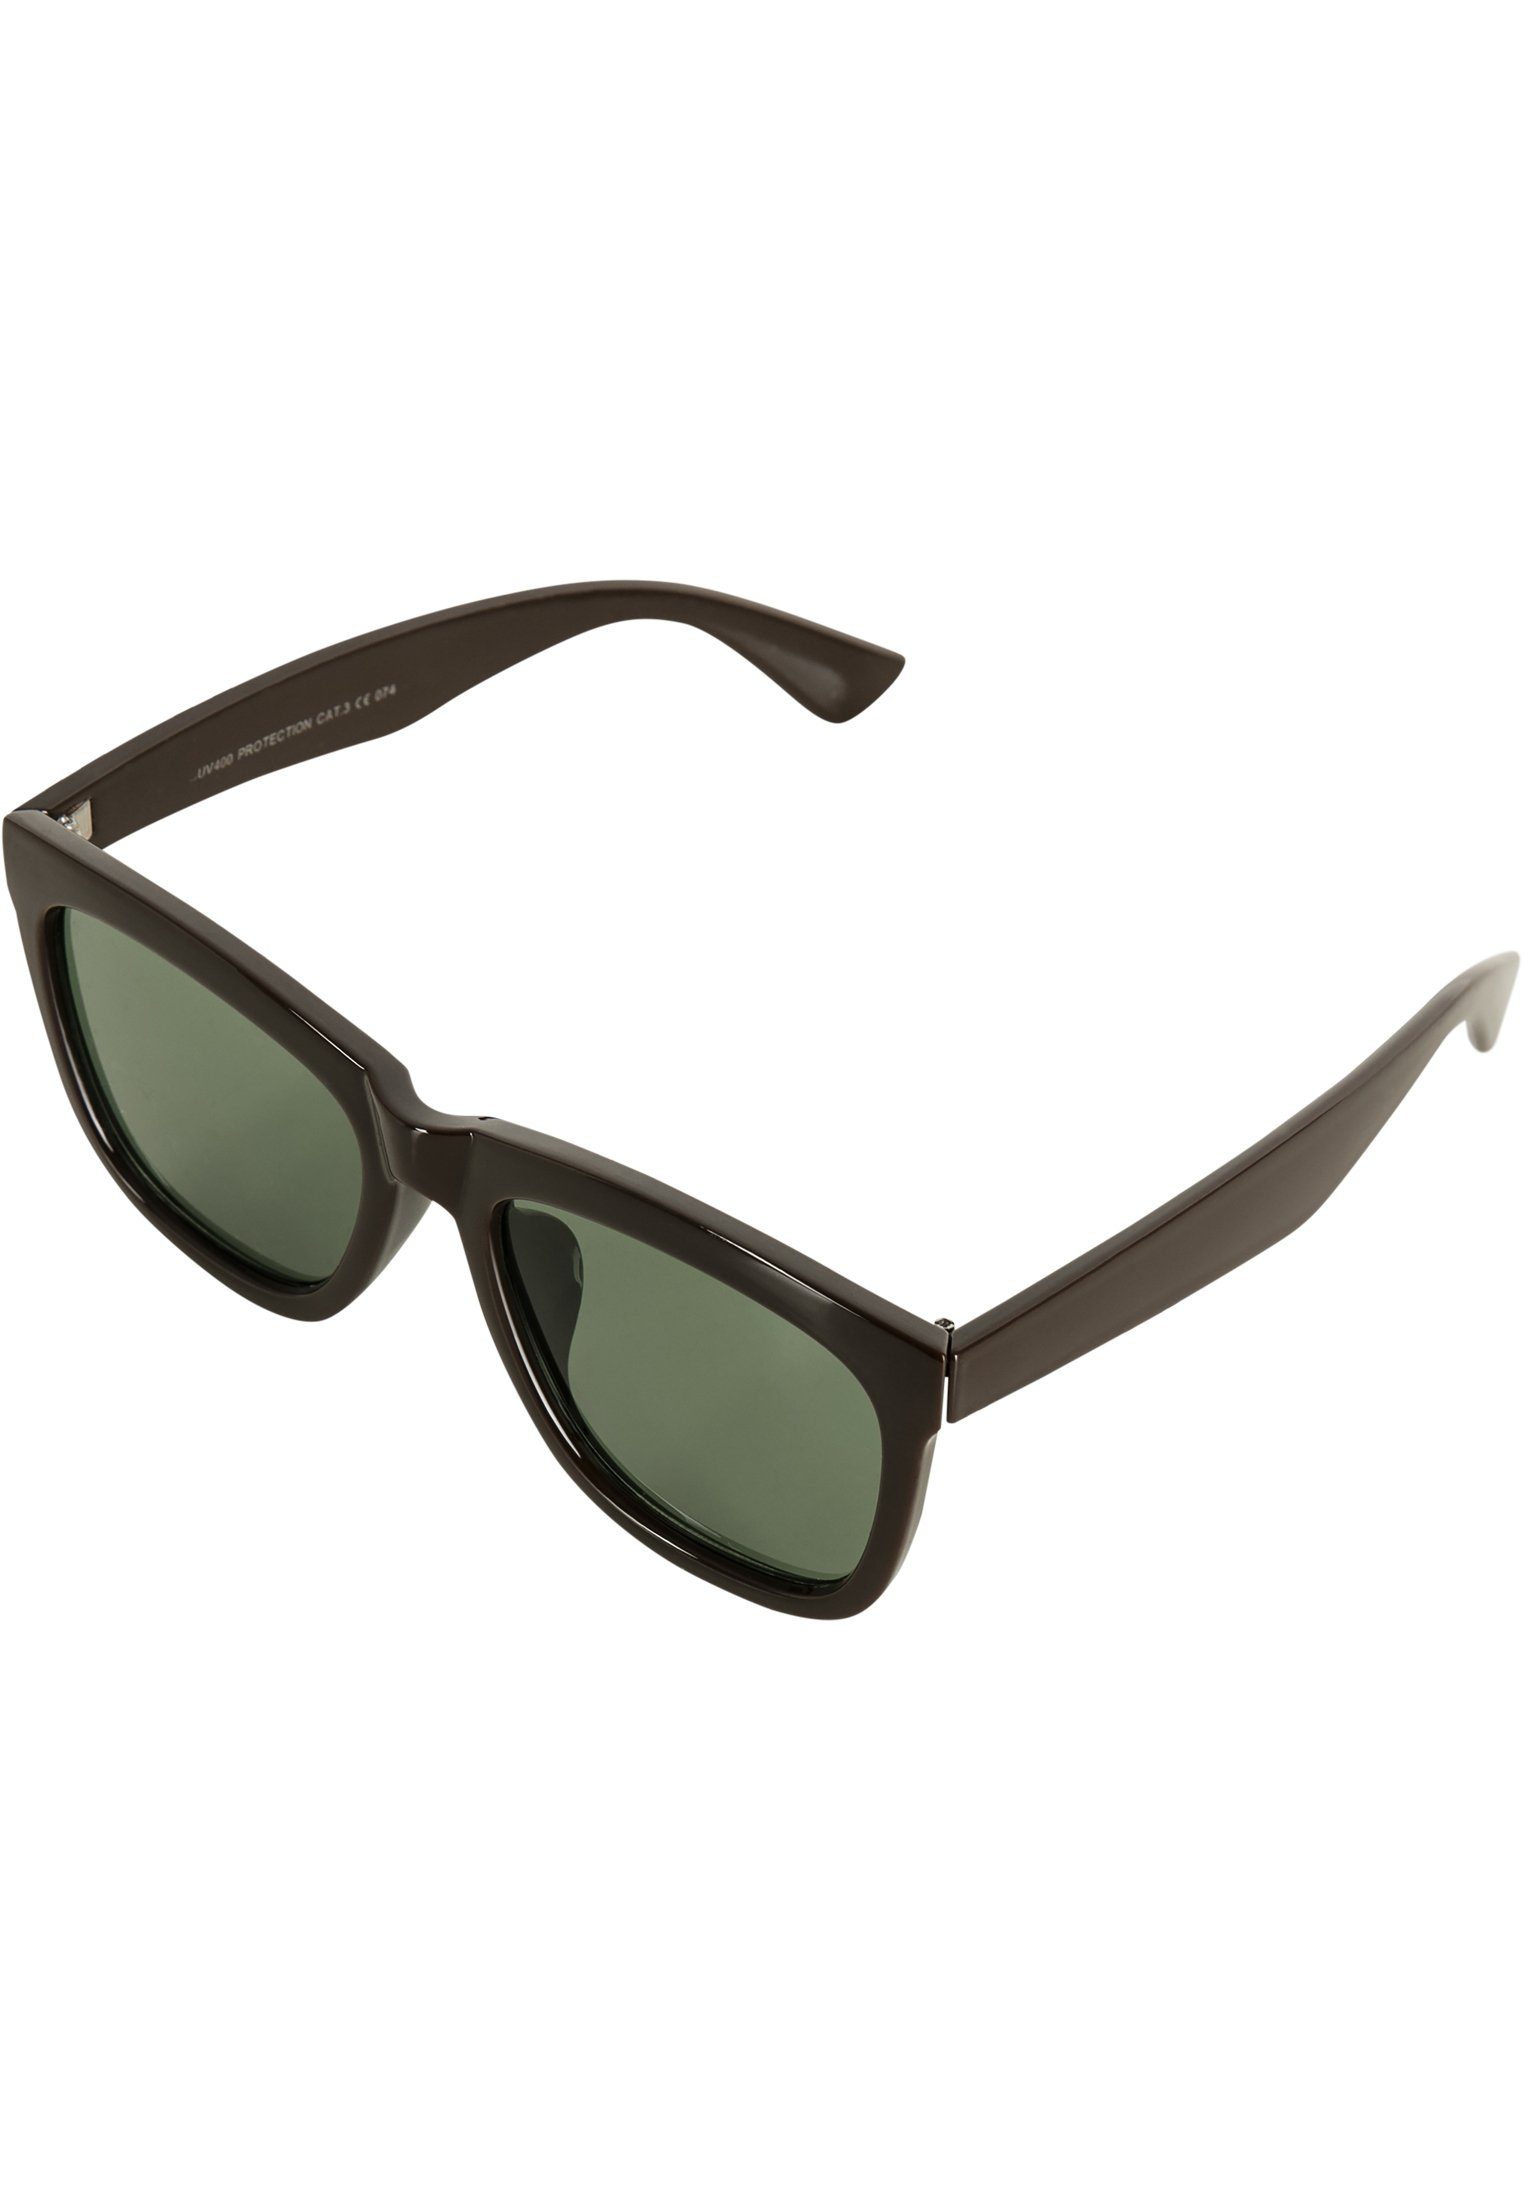 Accessoires September Sonnenbrille Sunglasses MSTRDS brown/green